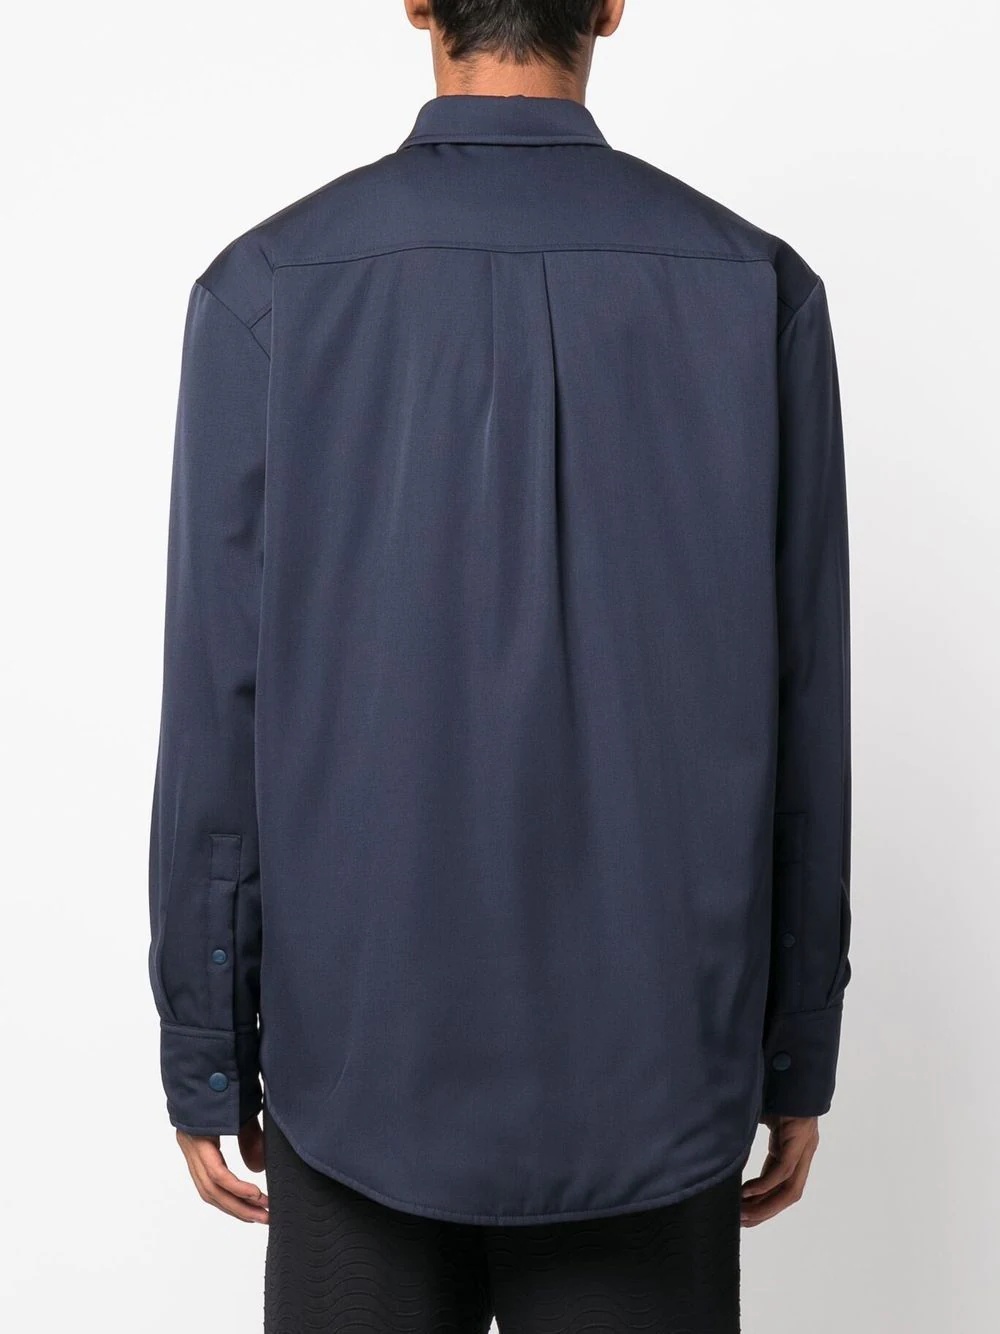 virgin-wool shirt jacket - 4